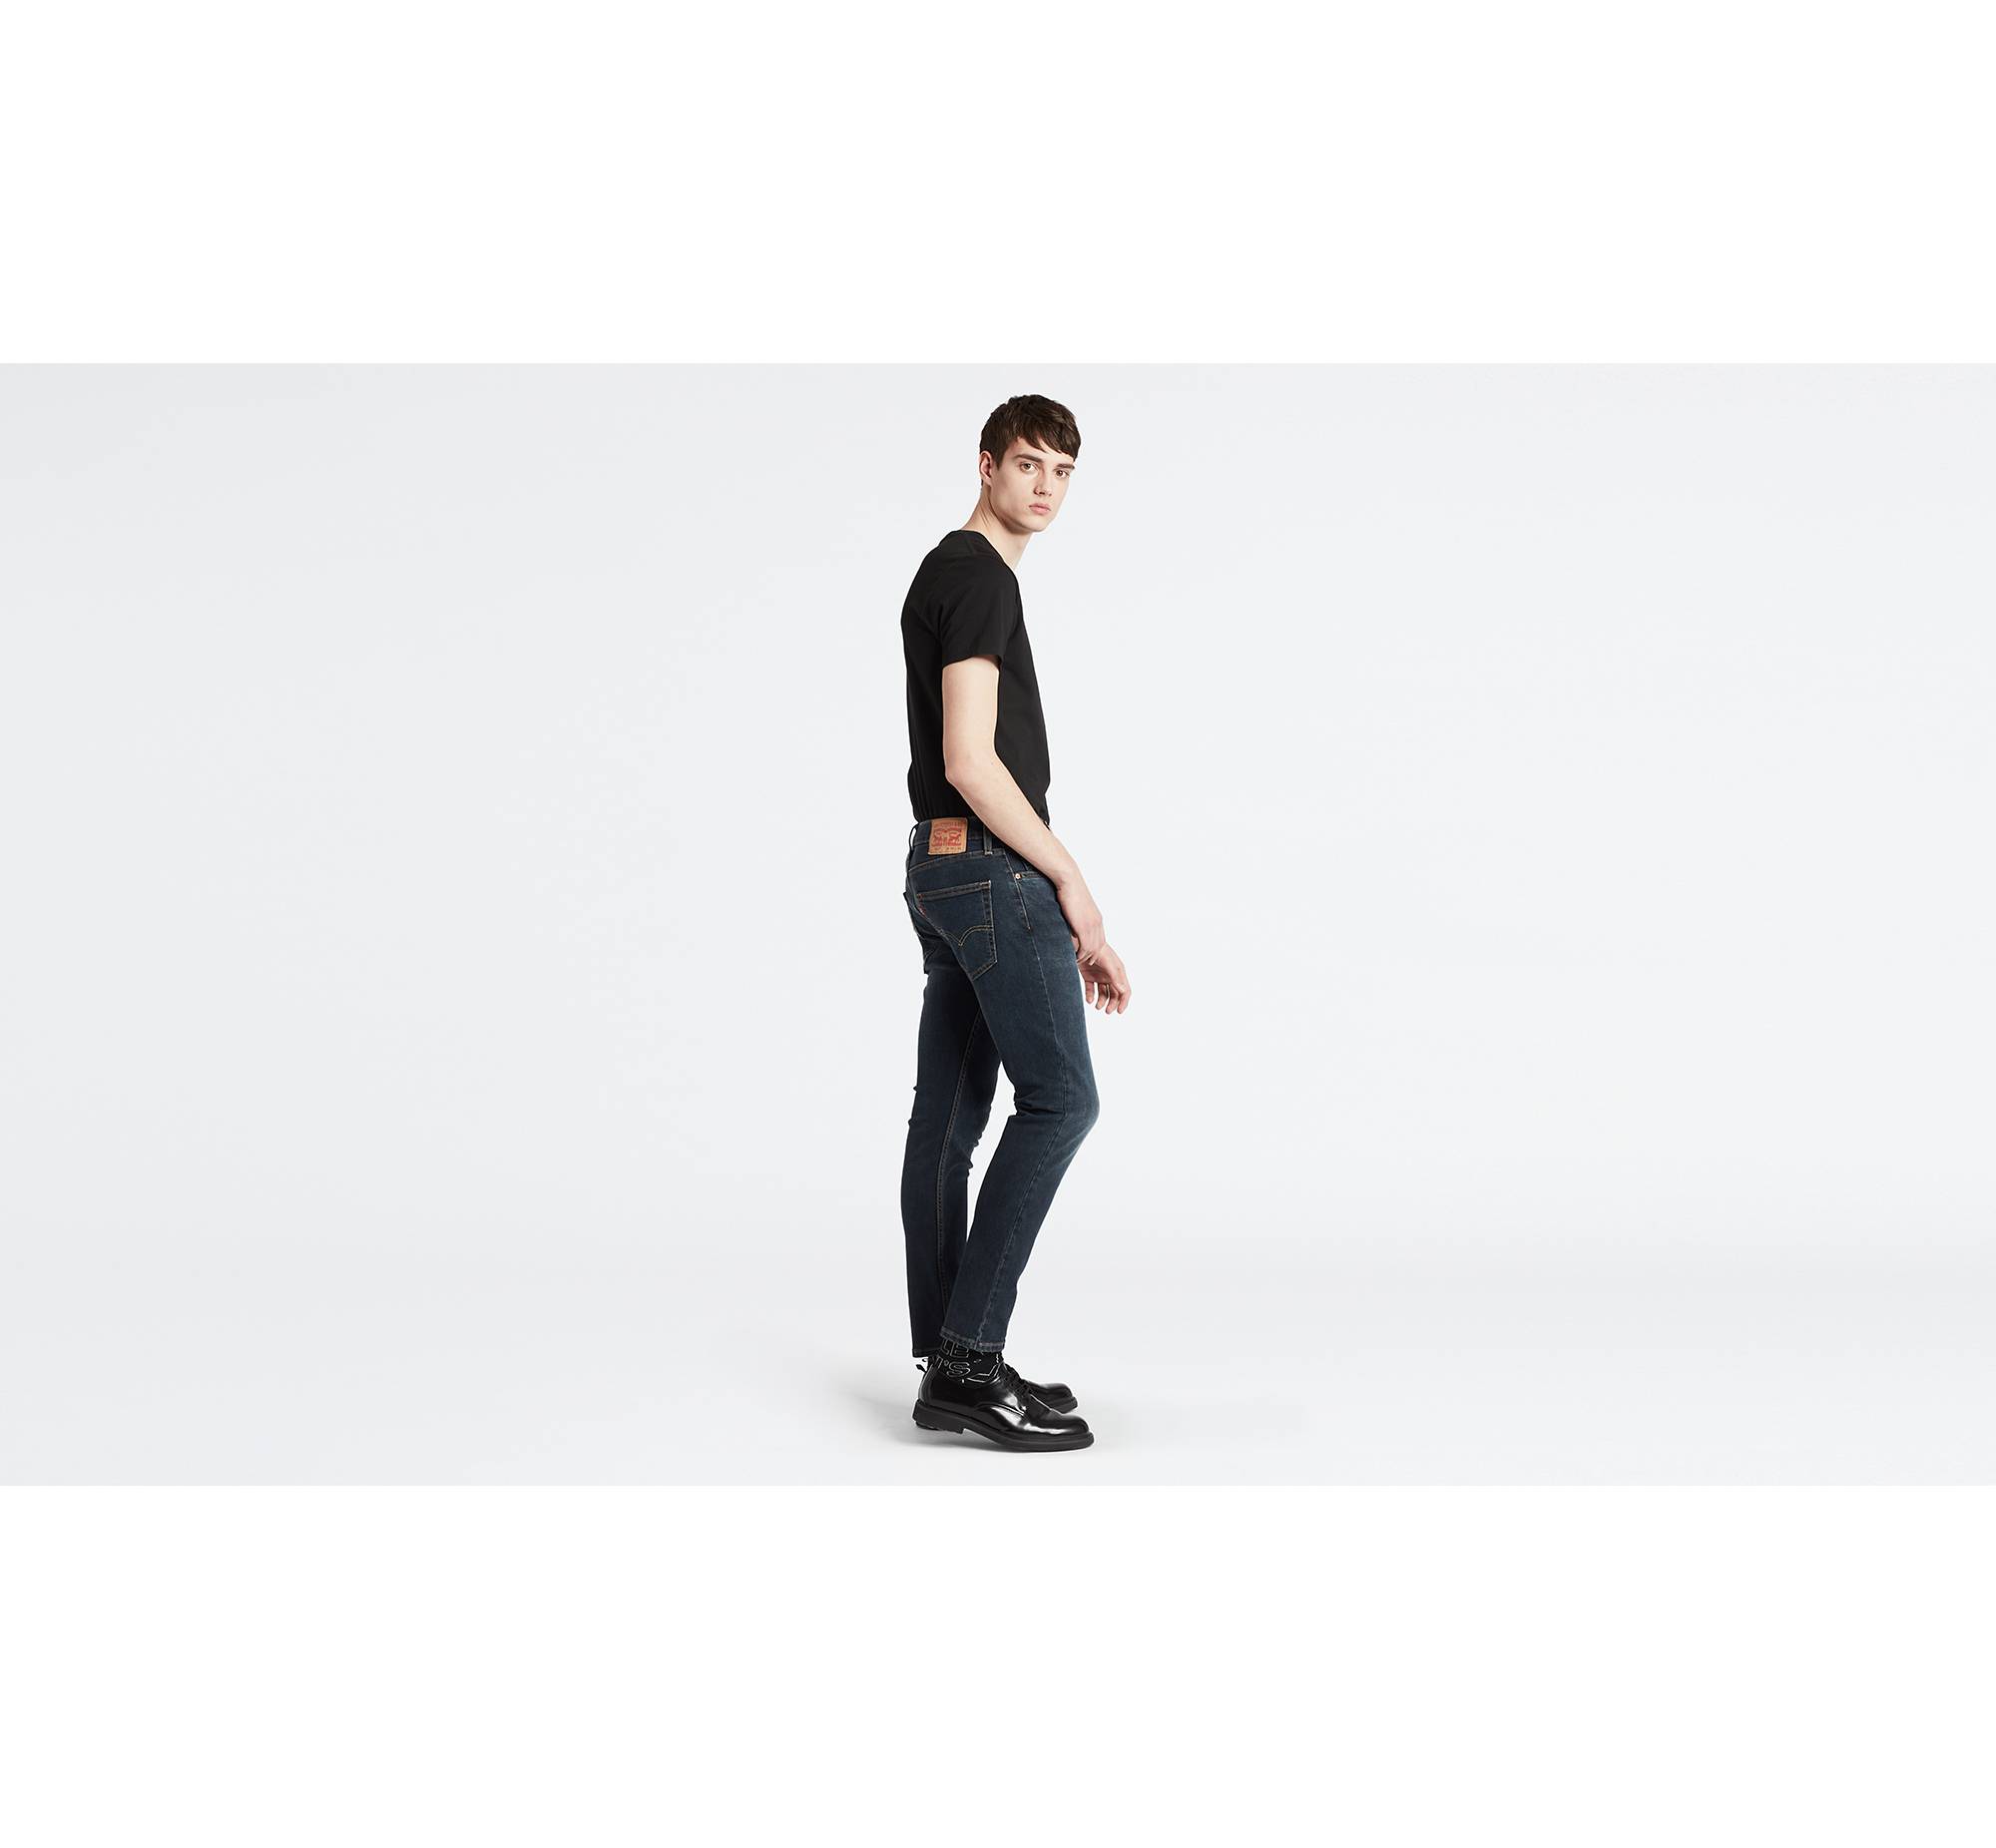 512™ Slim Taper Fit Flex Men's Jeans - Wash | Levi's®